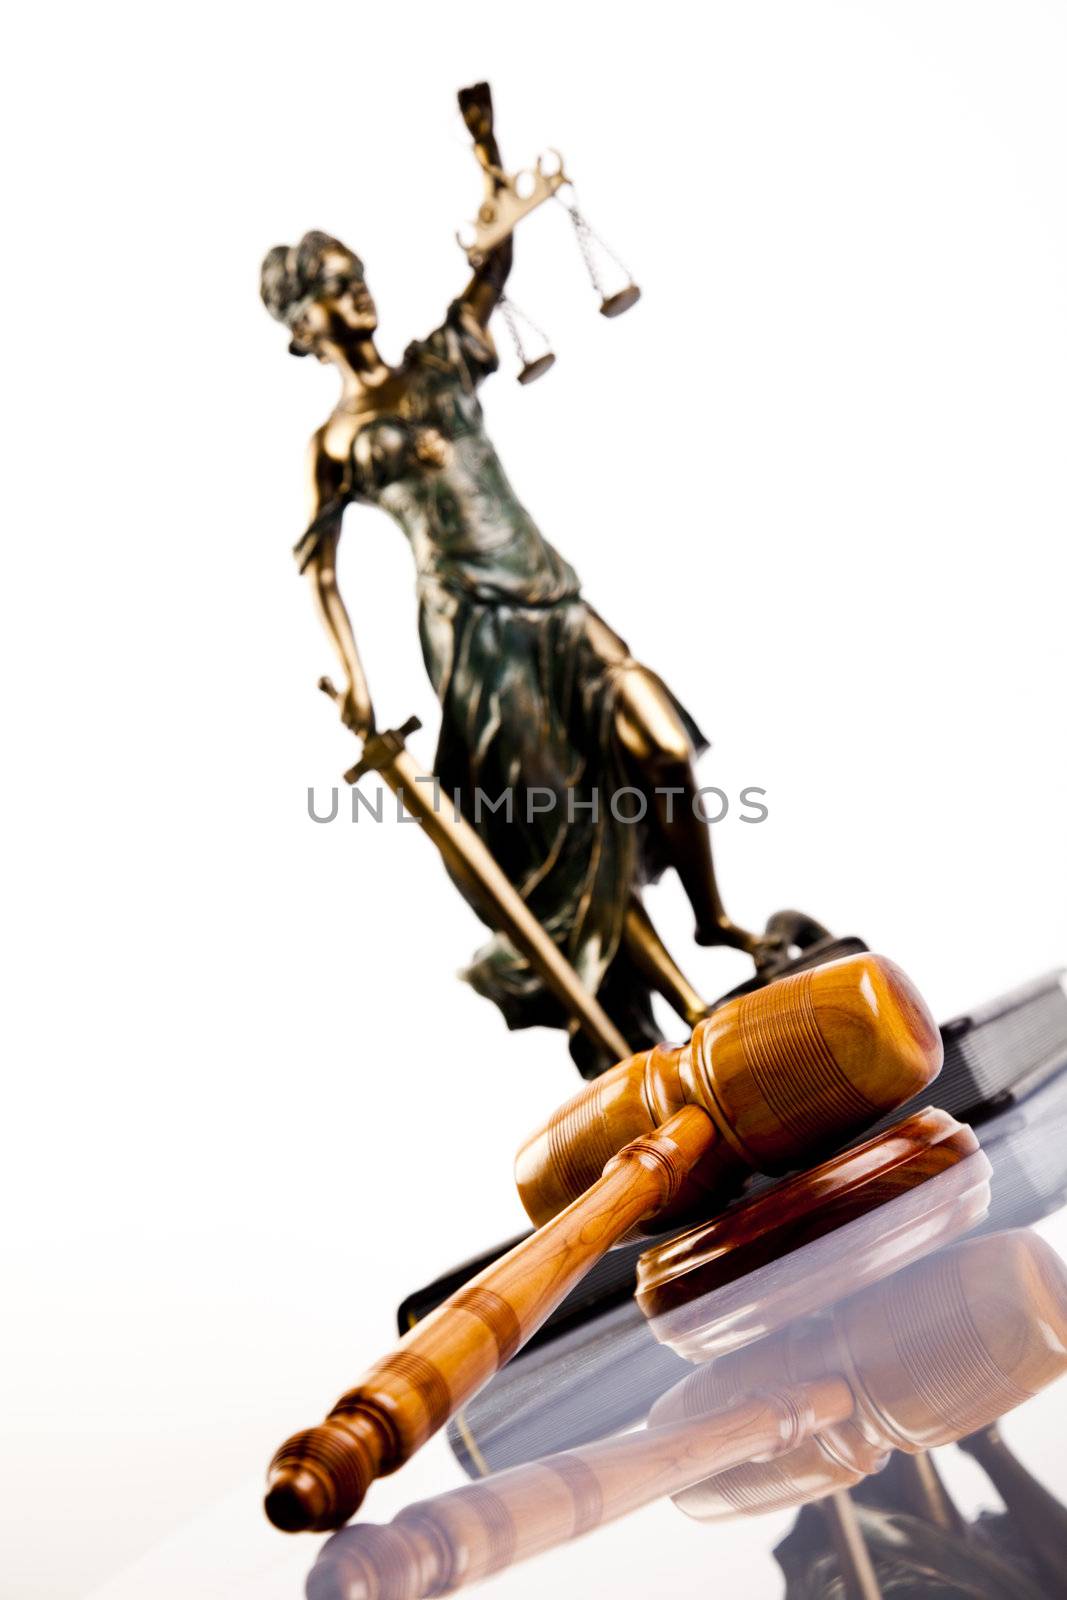 Antique statue of justice by JanPietruszka